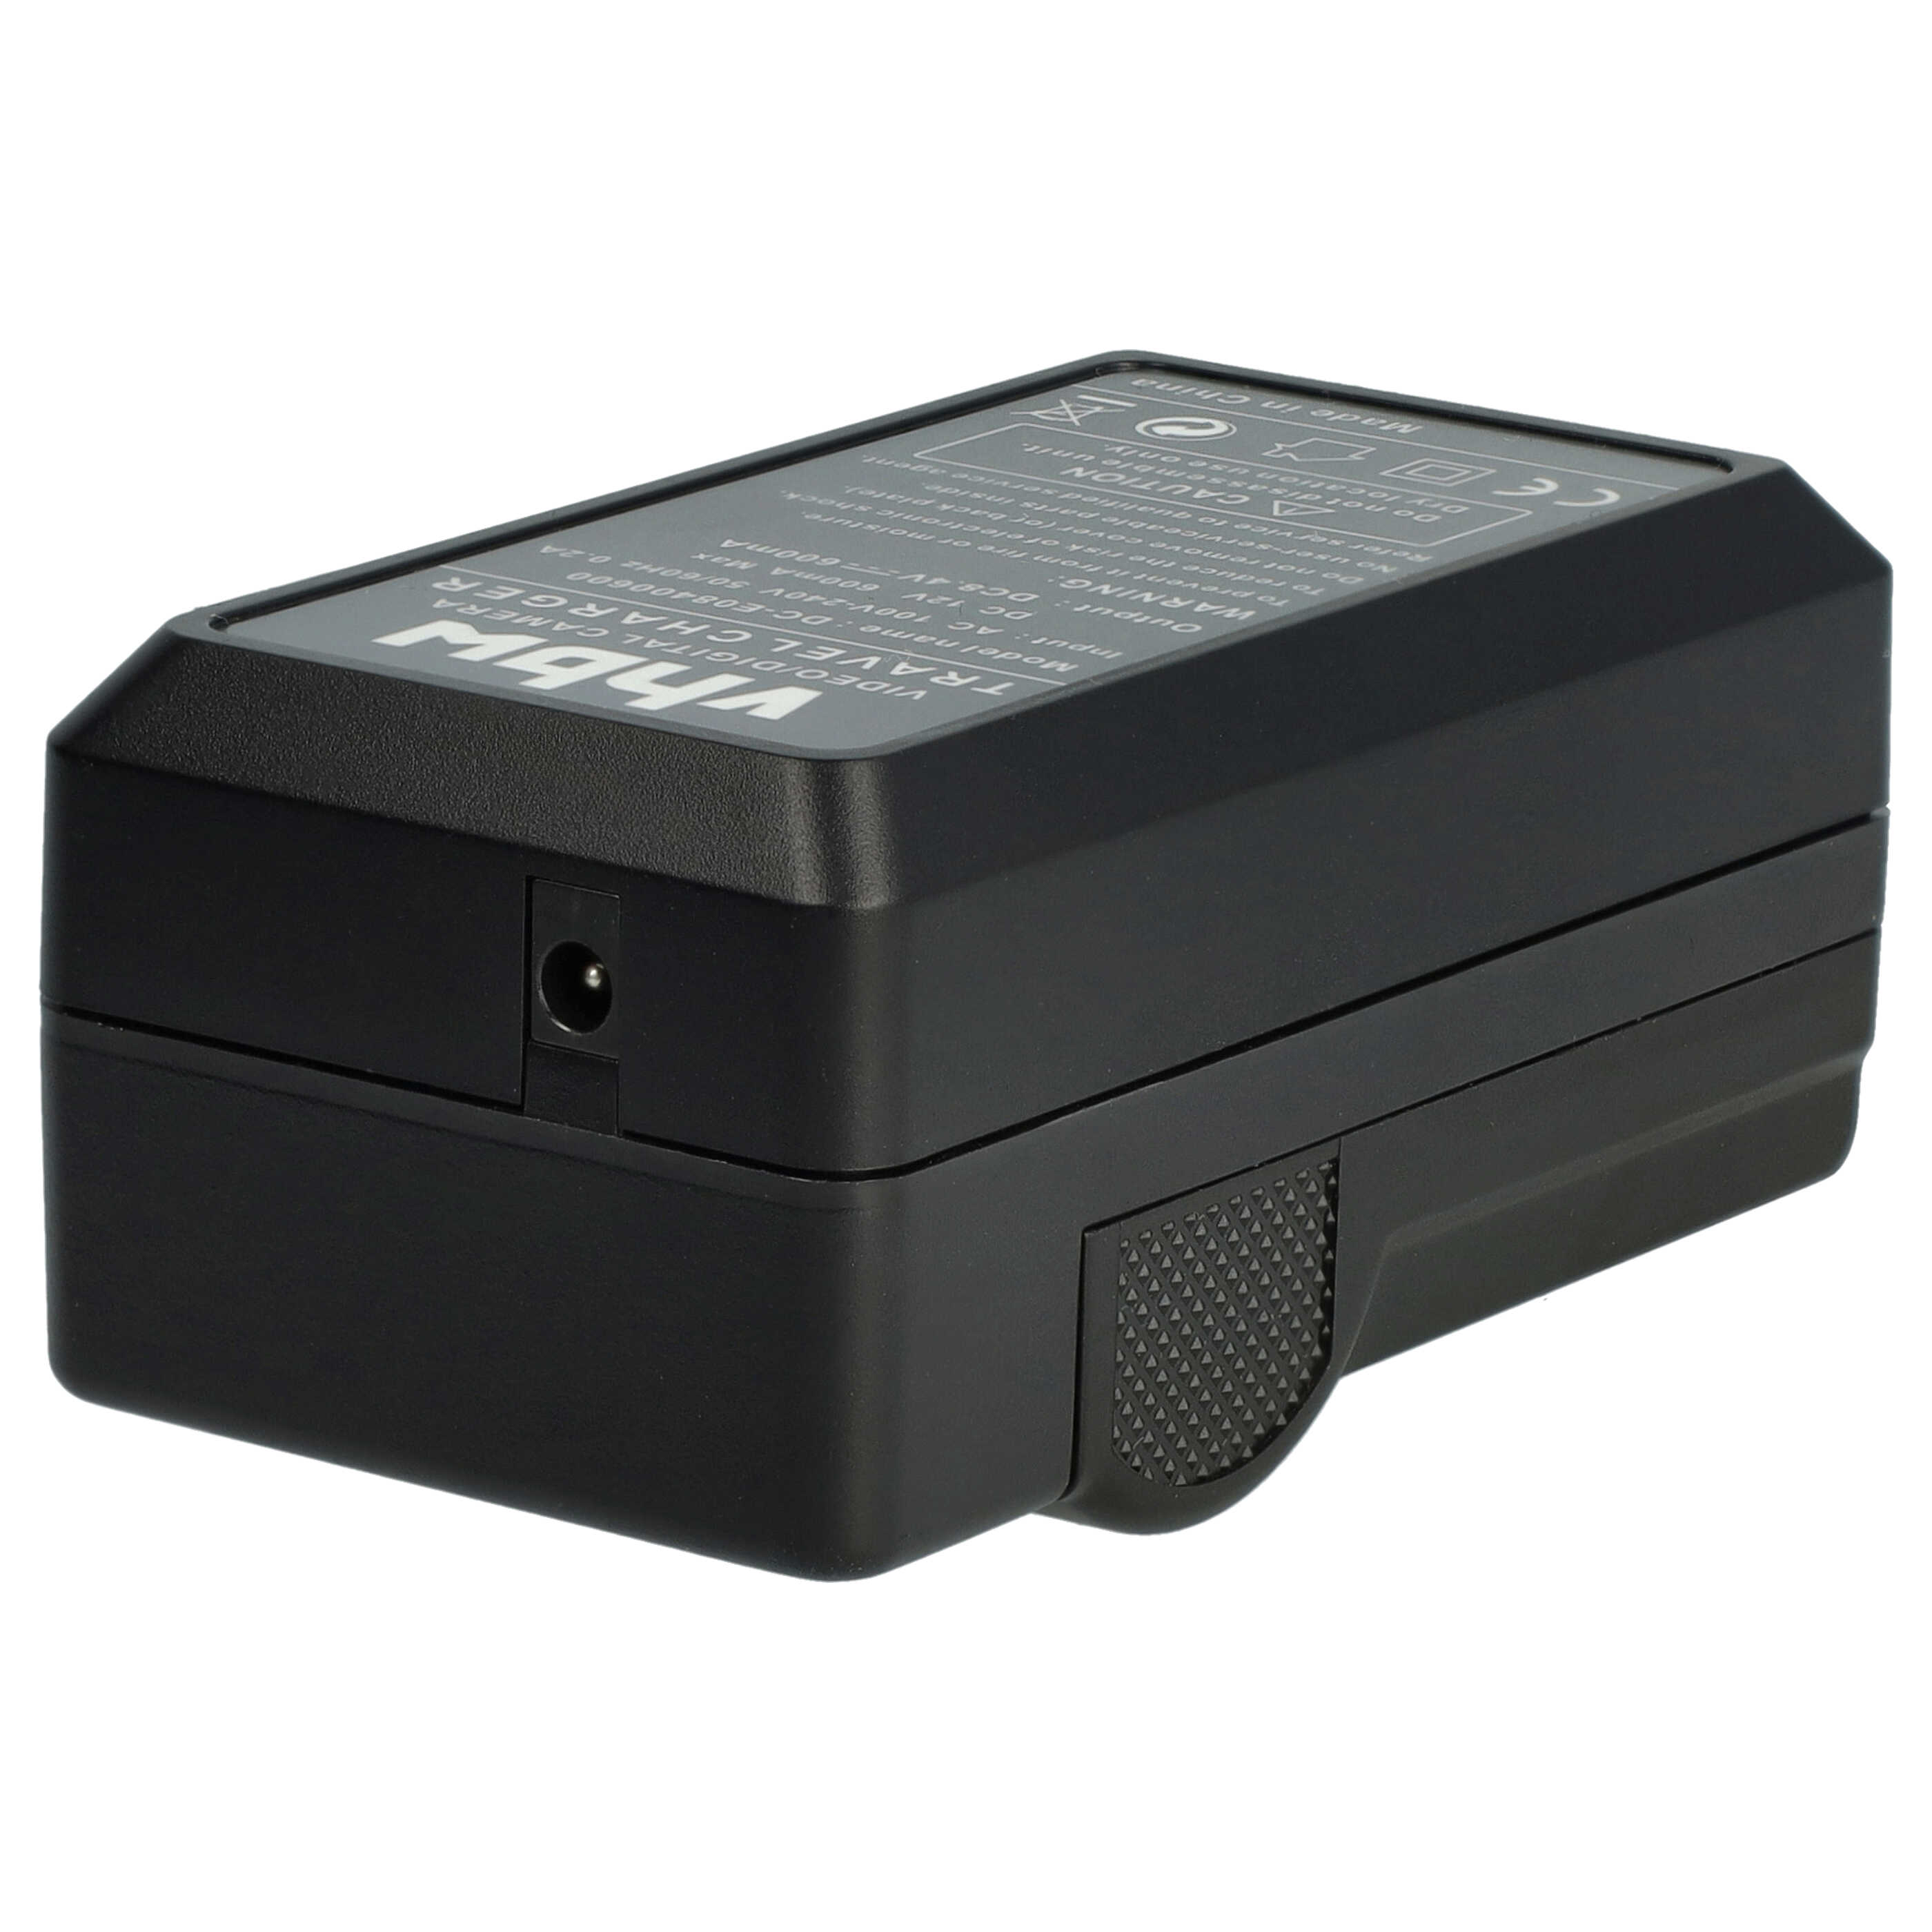 Ładowarka do aparatu V-Lux DMC-FZ100 i innych - ładowarka akumulatora 0,6 A, 8,4 V